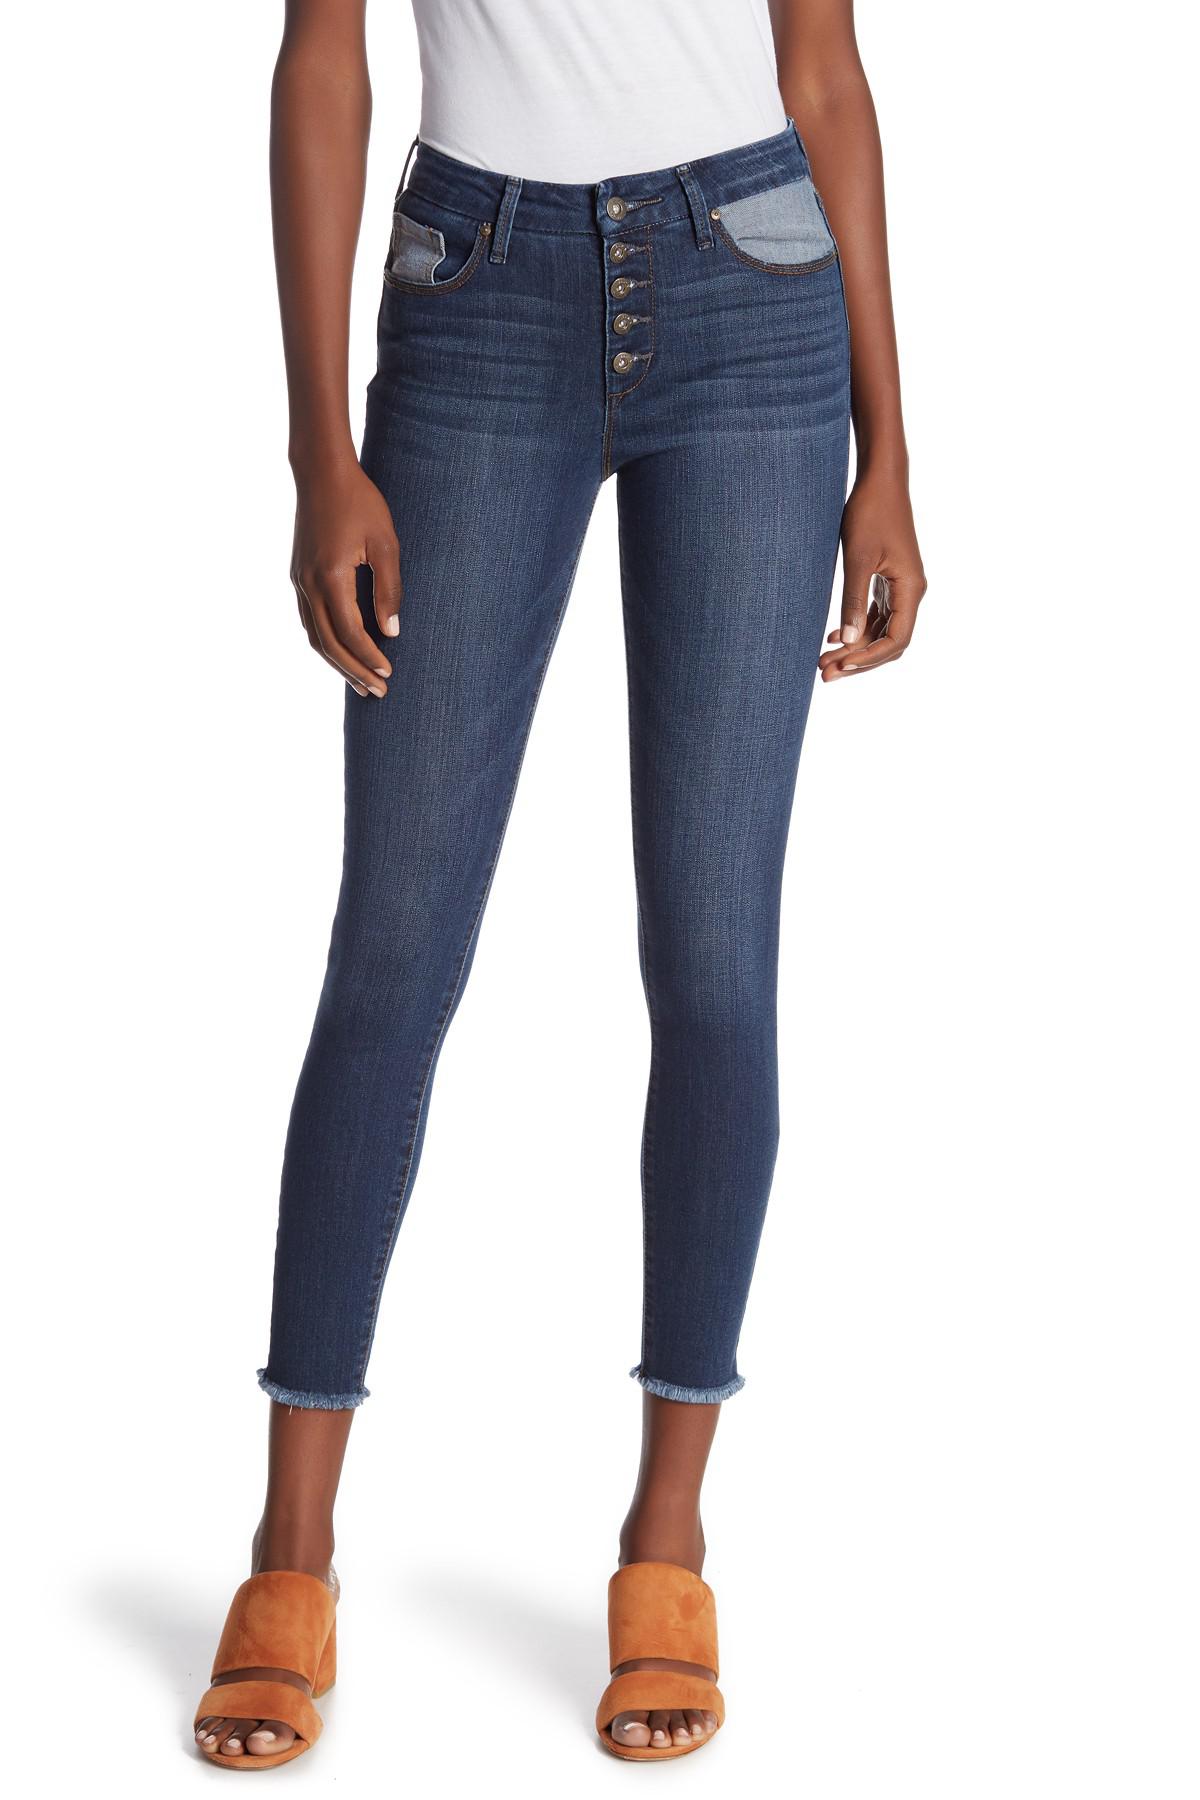 Jessica Simpson Denim Curvey High Rise Ankle Skinny Jeans ...